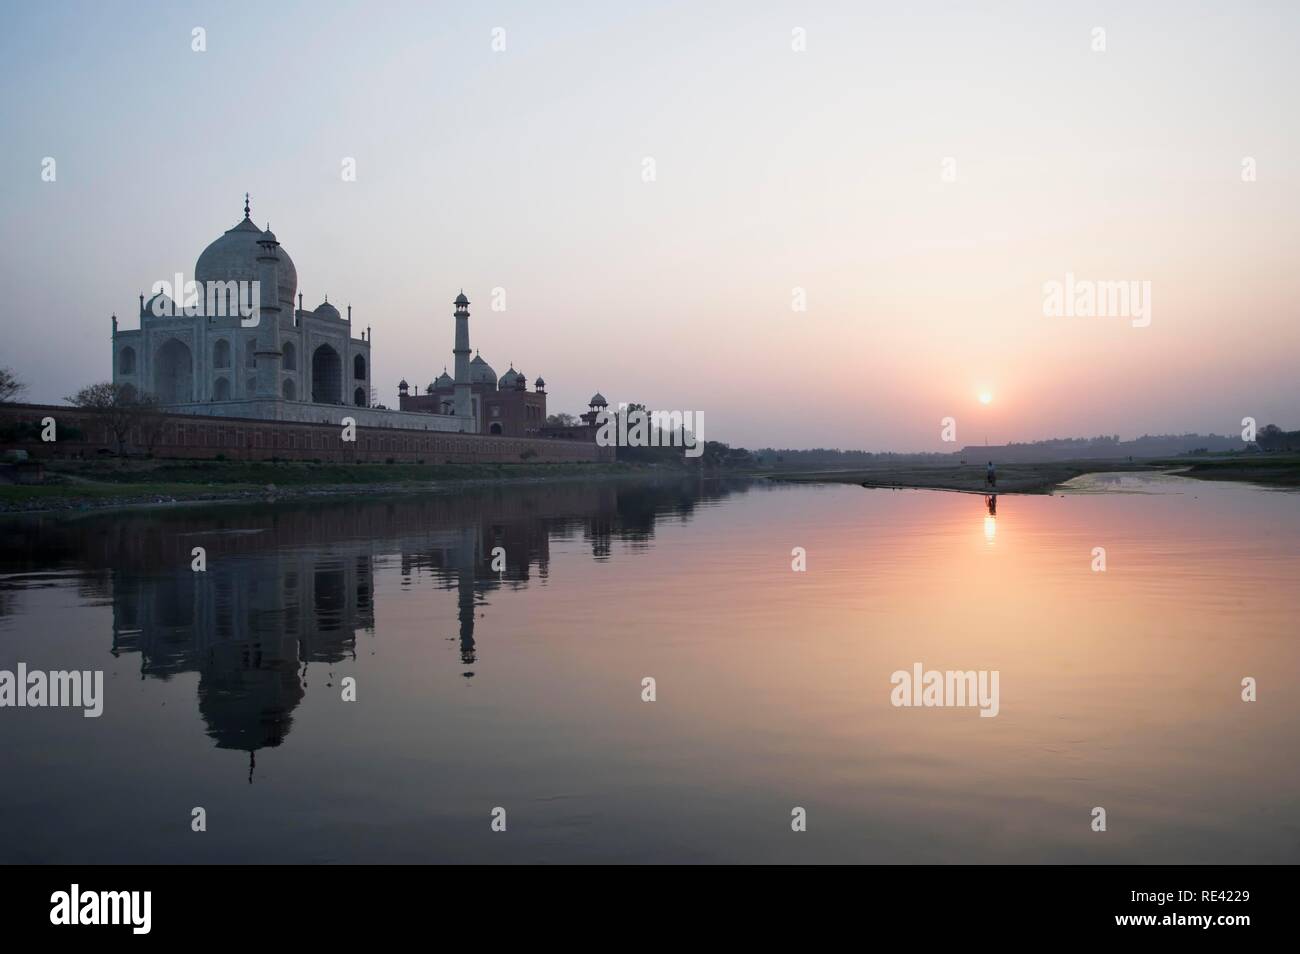 Taj Mahal reflecting in the Yamuna river at sunset, UNESCO World Heritage Site, Agra, Uttar Pradesh, India, Asia Stock Photo